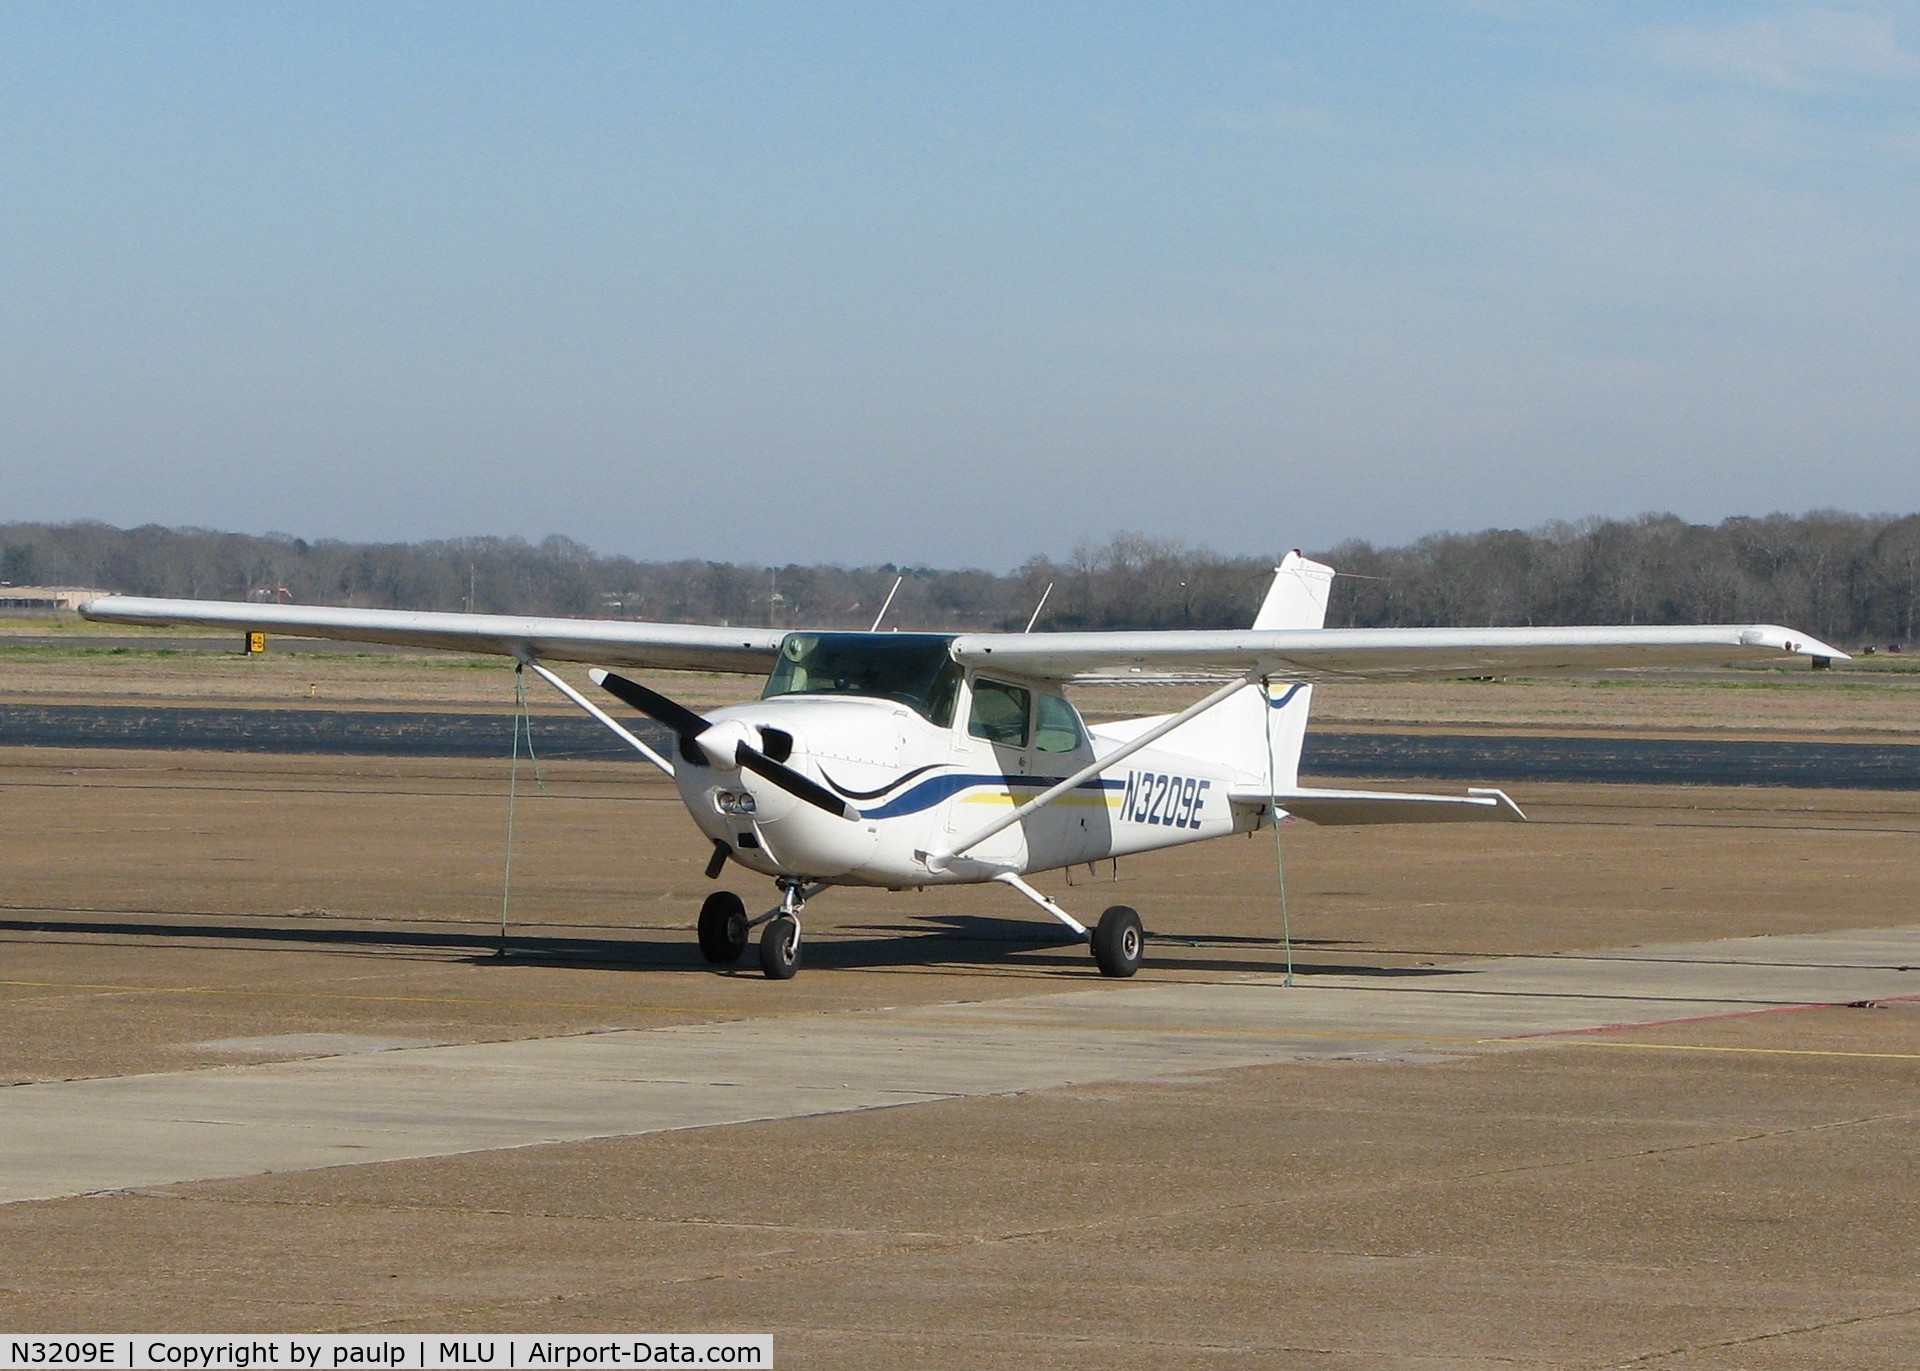 N3209E, 1978 Cessna 172N C/N 17271469, Parked at the Monroe,Louisiana airport.